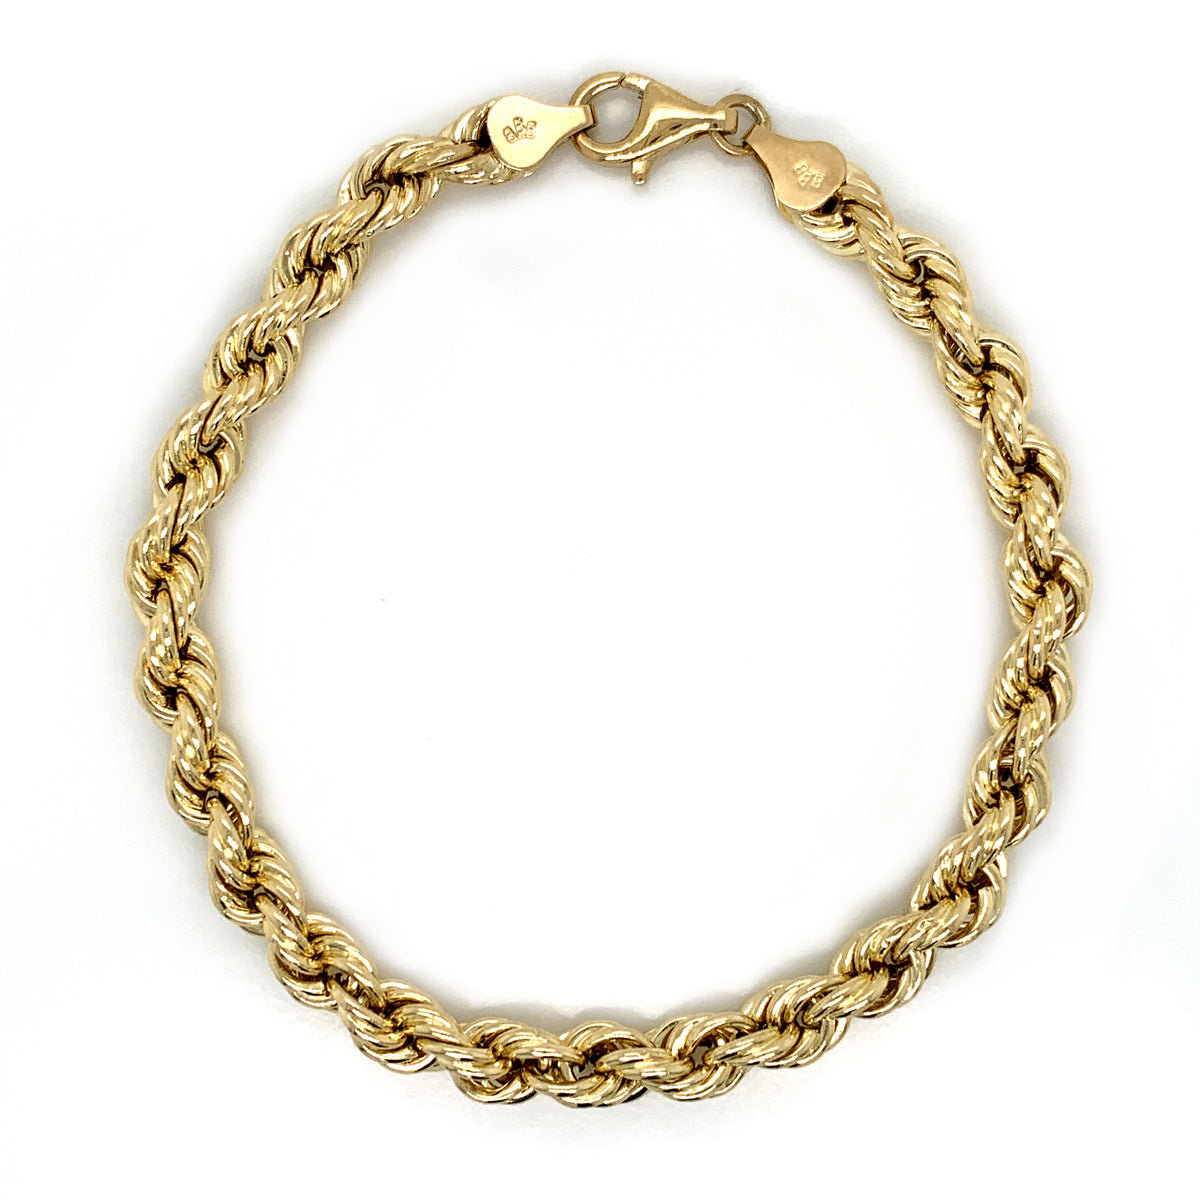 10mm Gold Rope Bracelet 10K - White Carat - USA & Canada